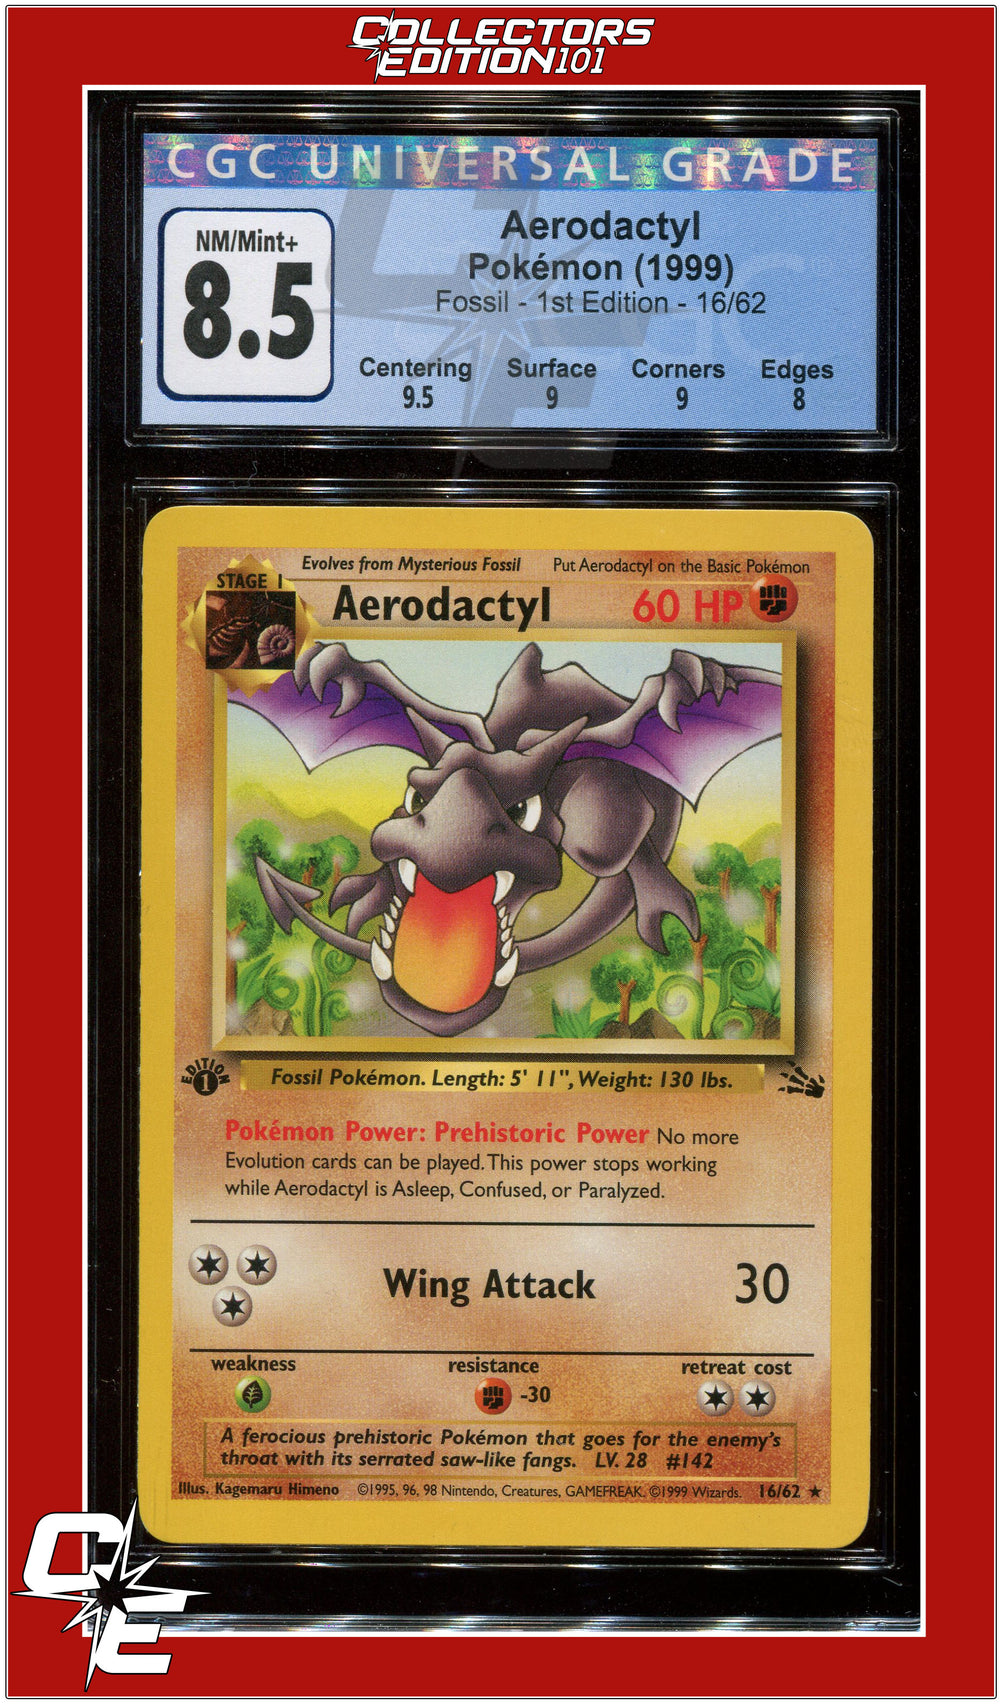 Aerodactyl (16/62) [Fossil 1st Edition]